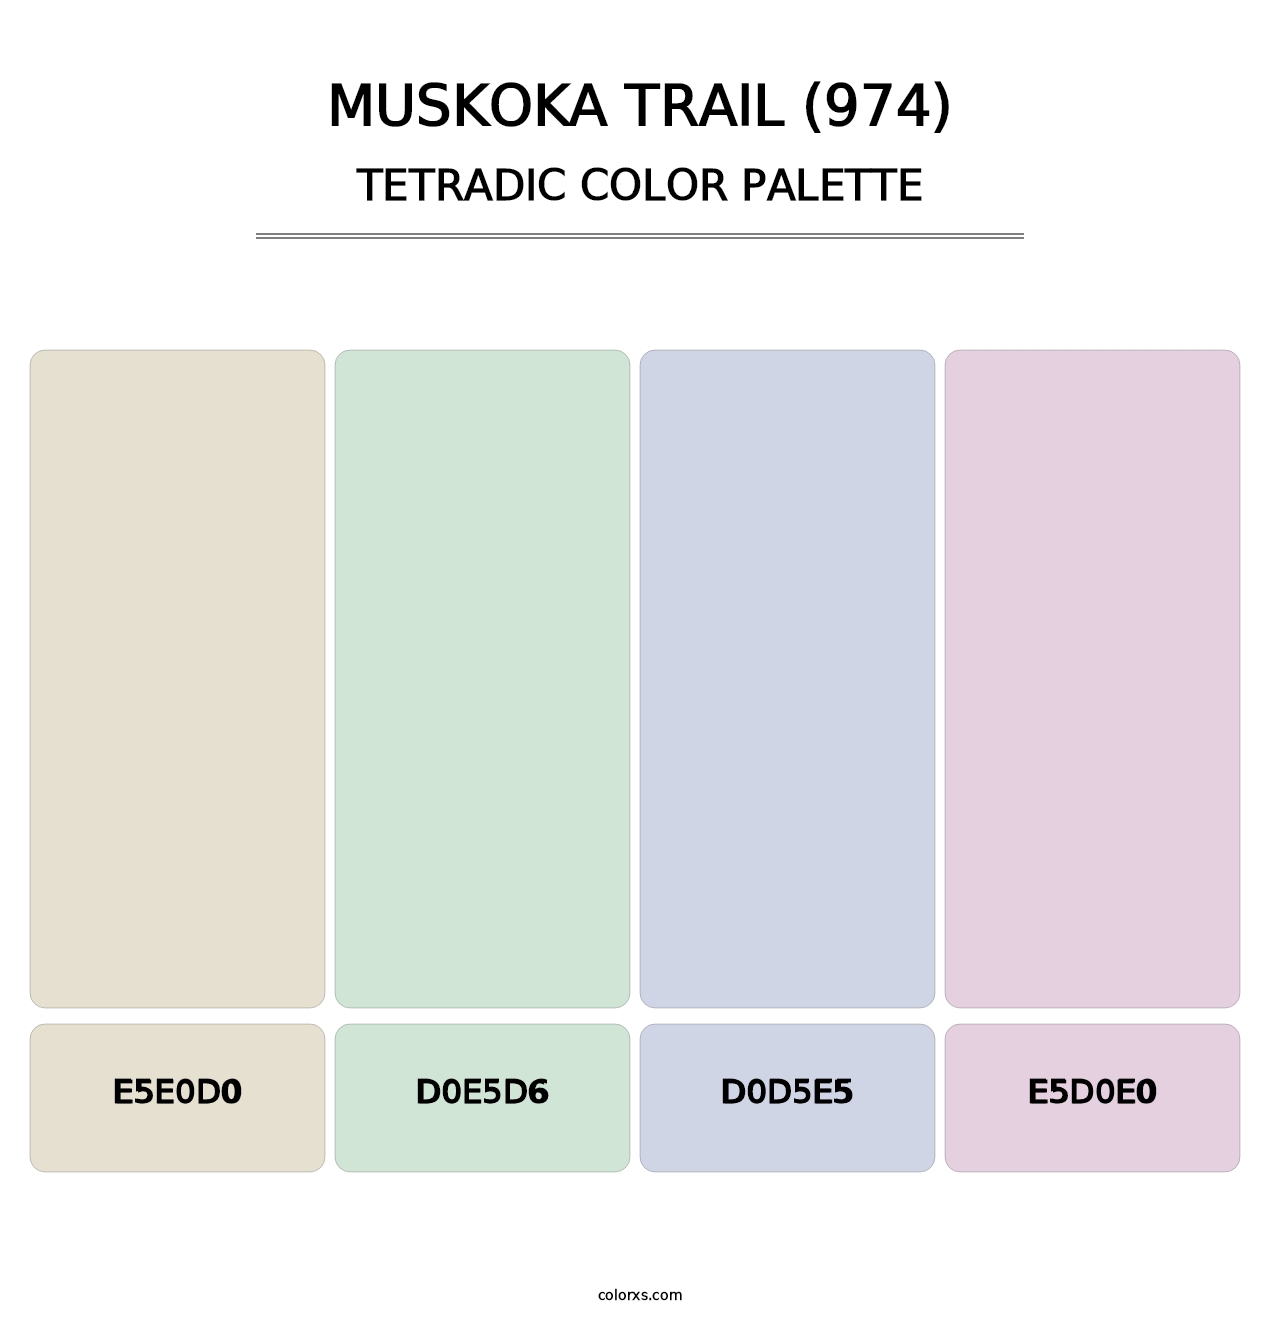 Muskoka Trail (974) - Tetradic Color Palette